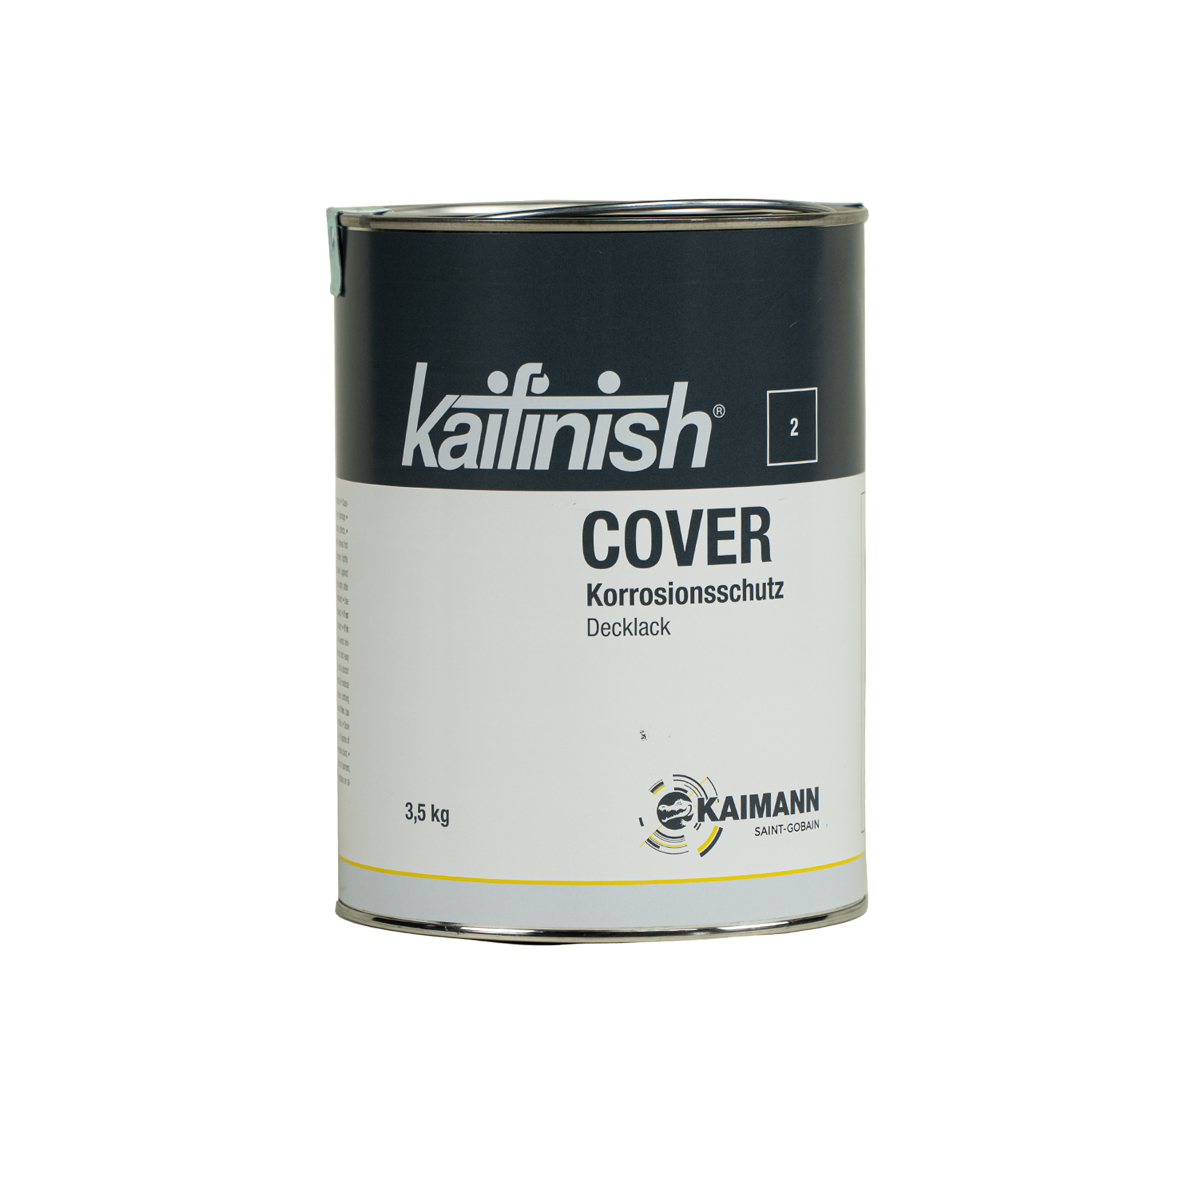 Kaifinish Cover Deckbeschichtung Farbe